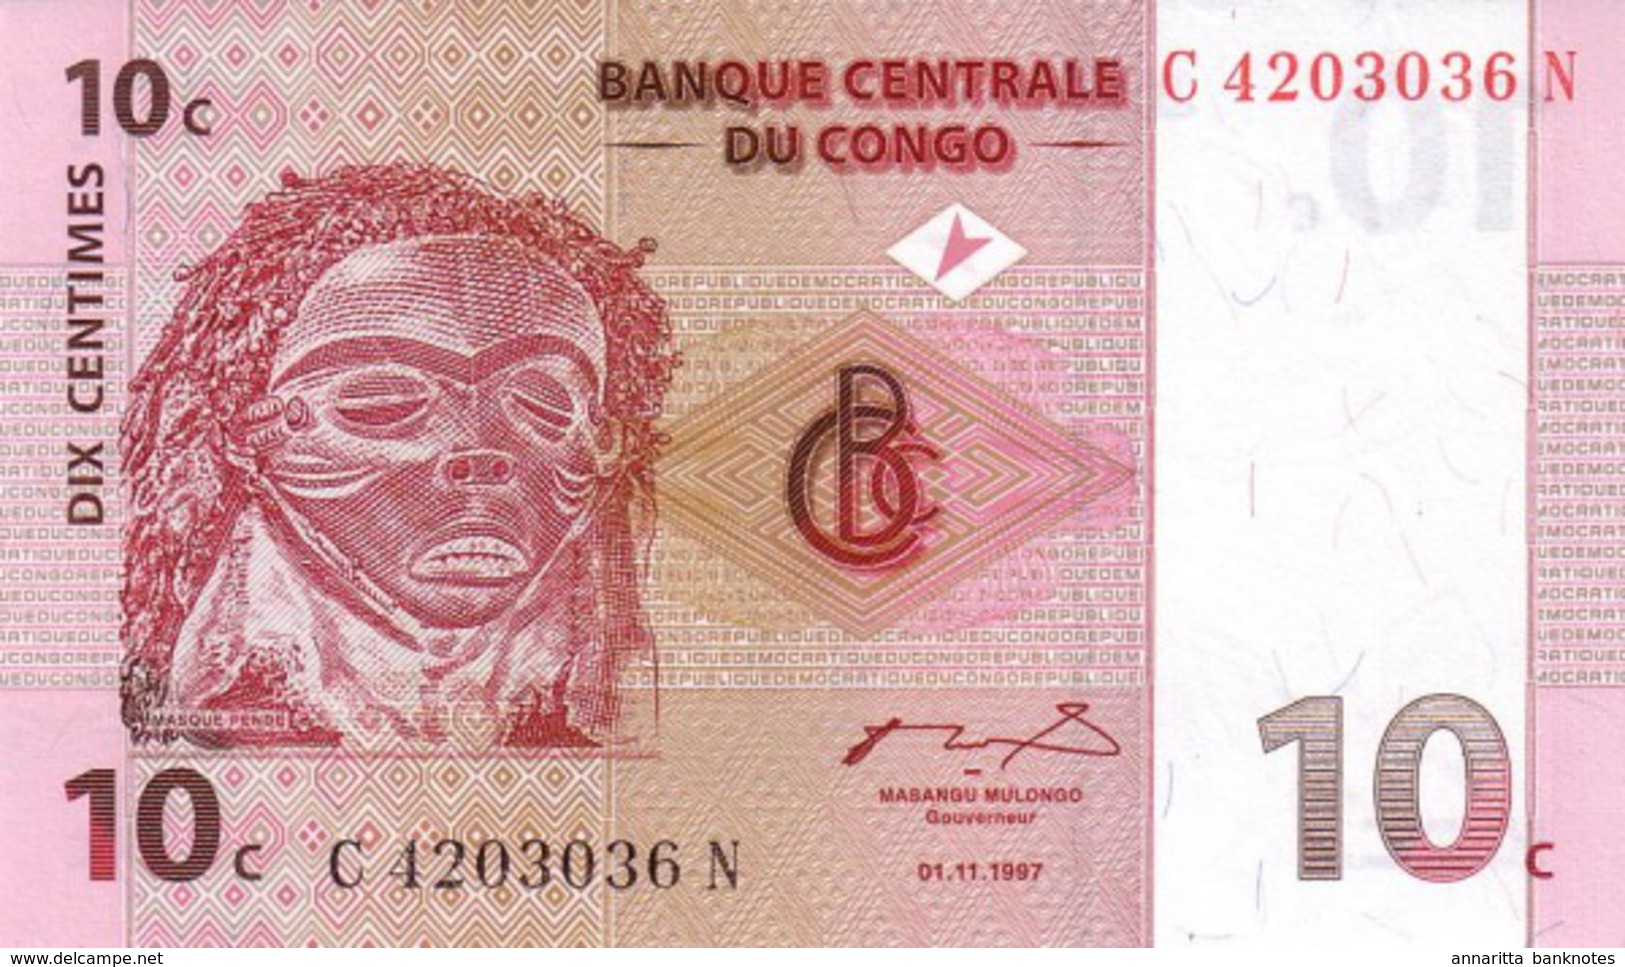 CONGO DEMOCRATIC REPUBLIC 10 CENTIMES 1997 P-82 UNC [ CD303a ] - Democratic Republic Of The Congo & Zaire